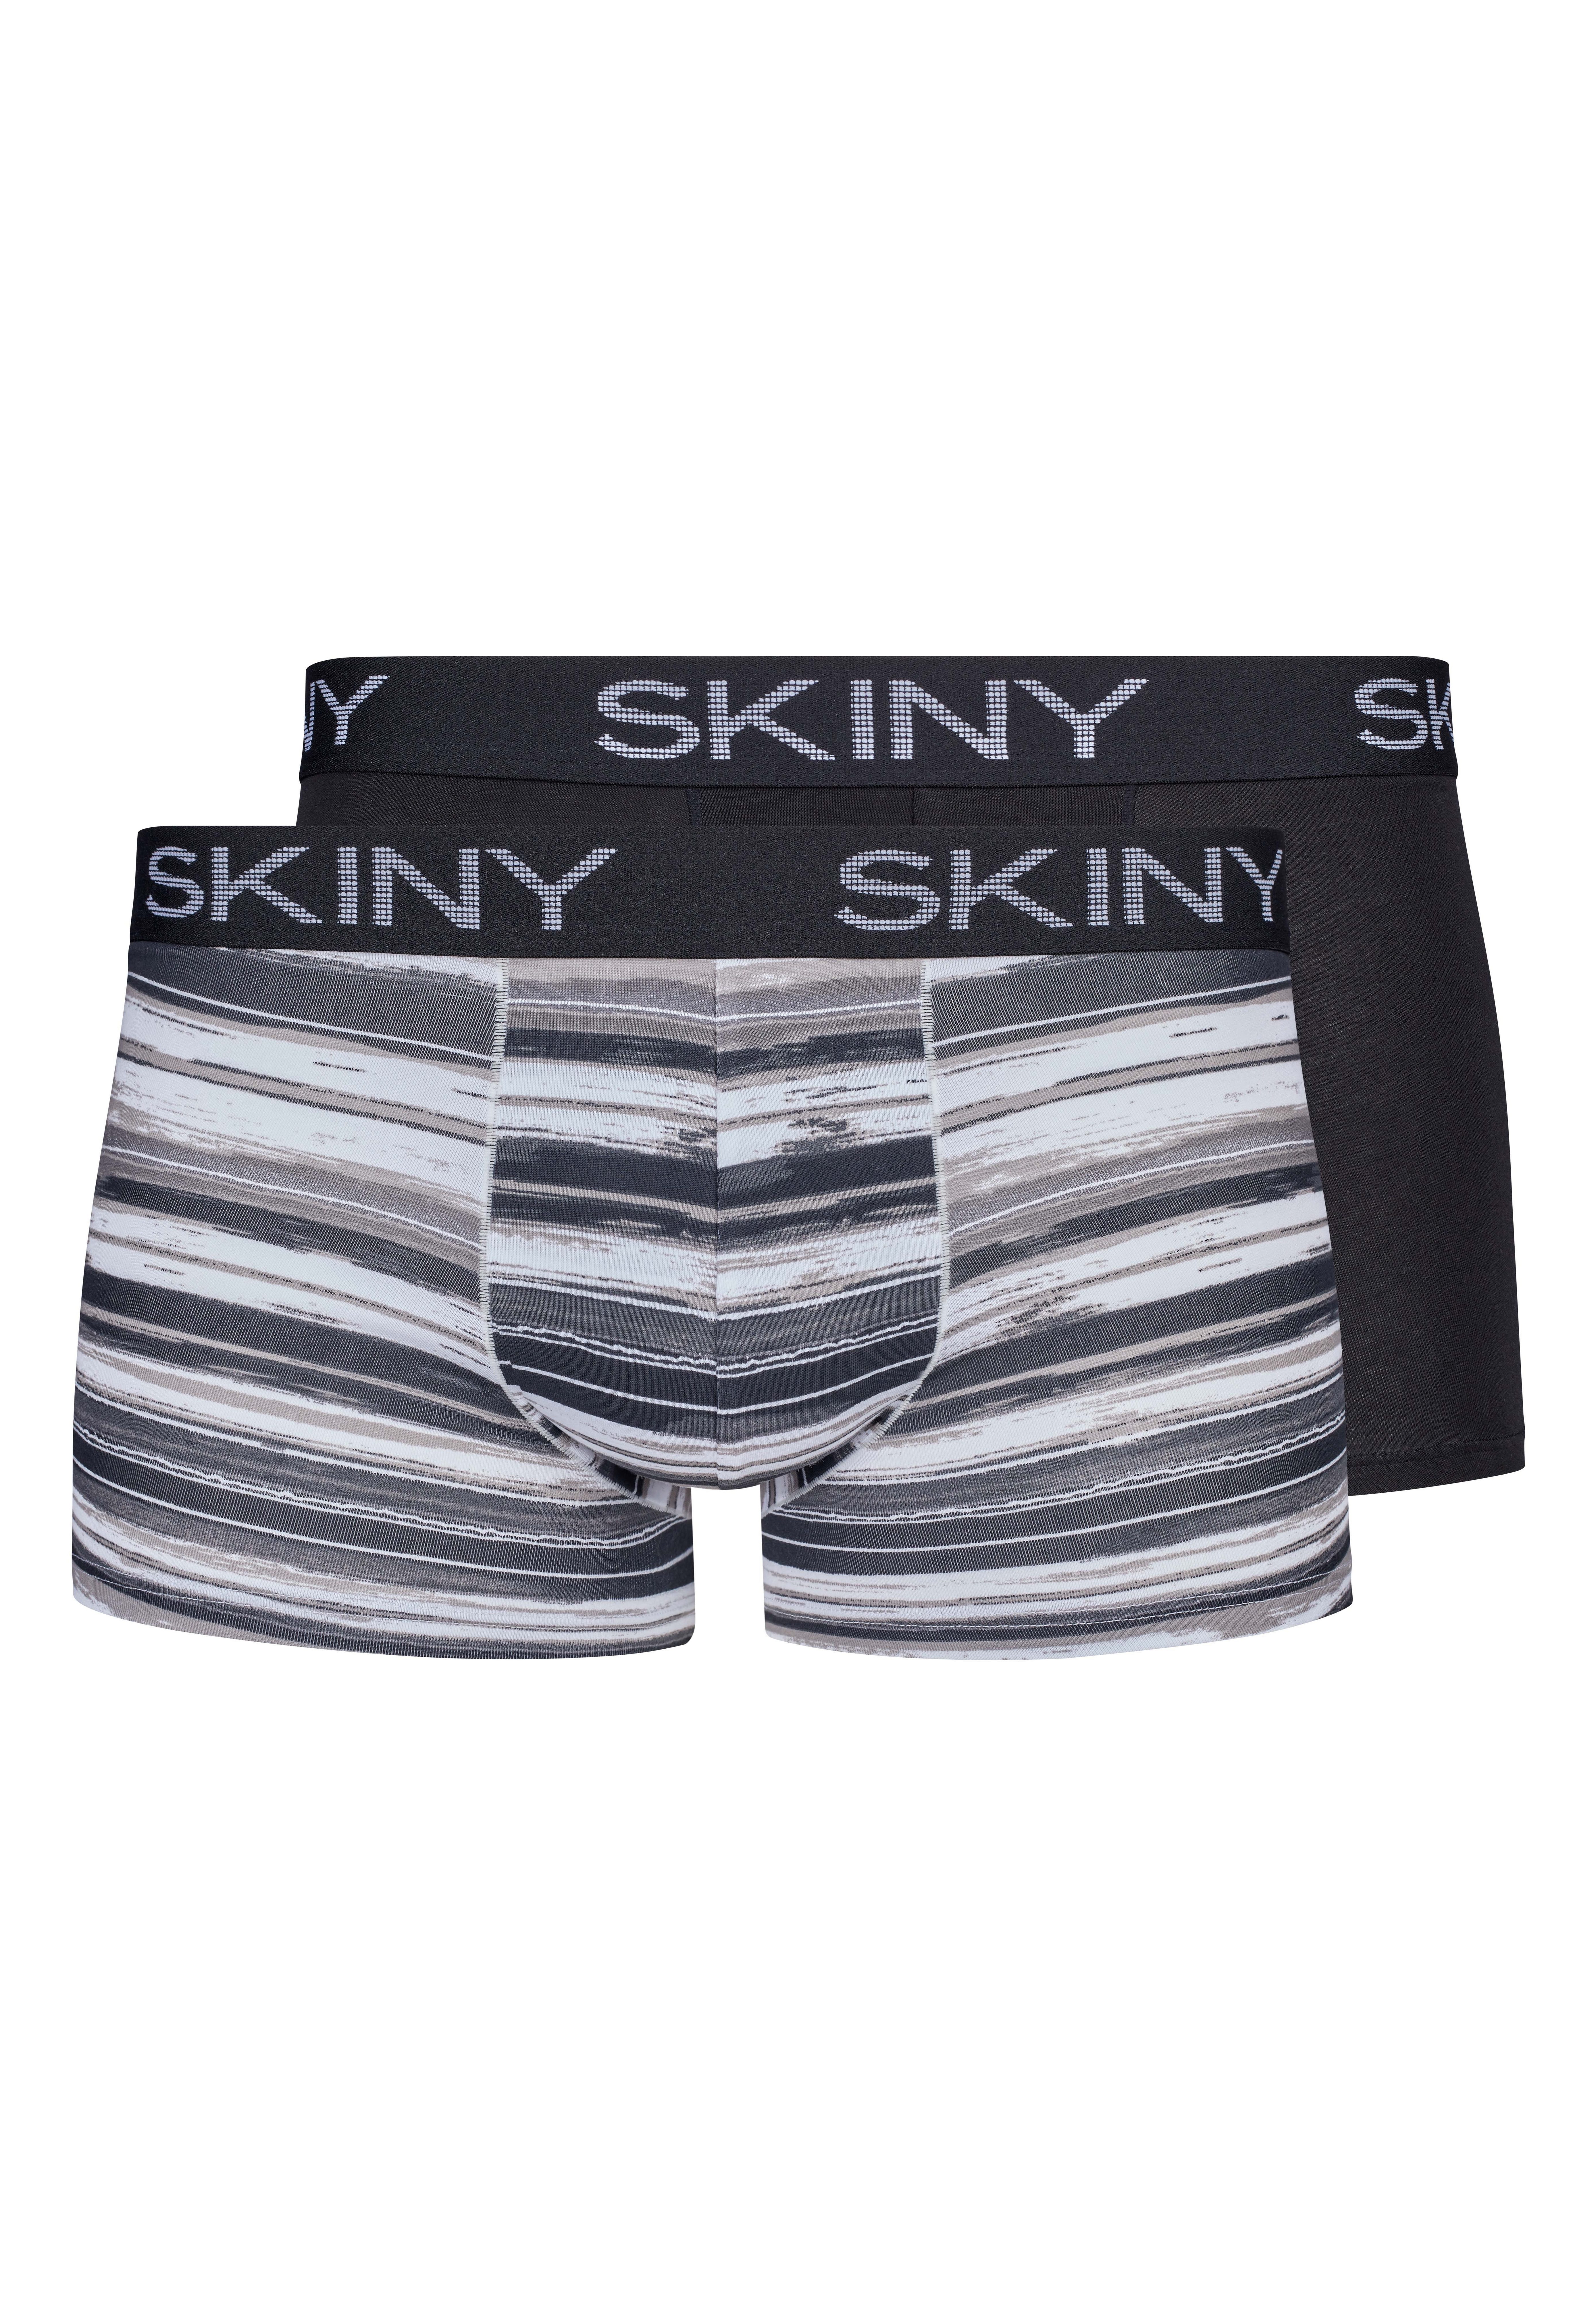 Skiny Retro Pants Doppelpack Herren Boxershorts (2-St) Doppelpack schwarz | schwarz/weiß | Unterhosen